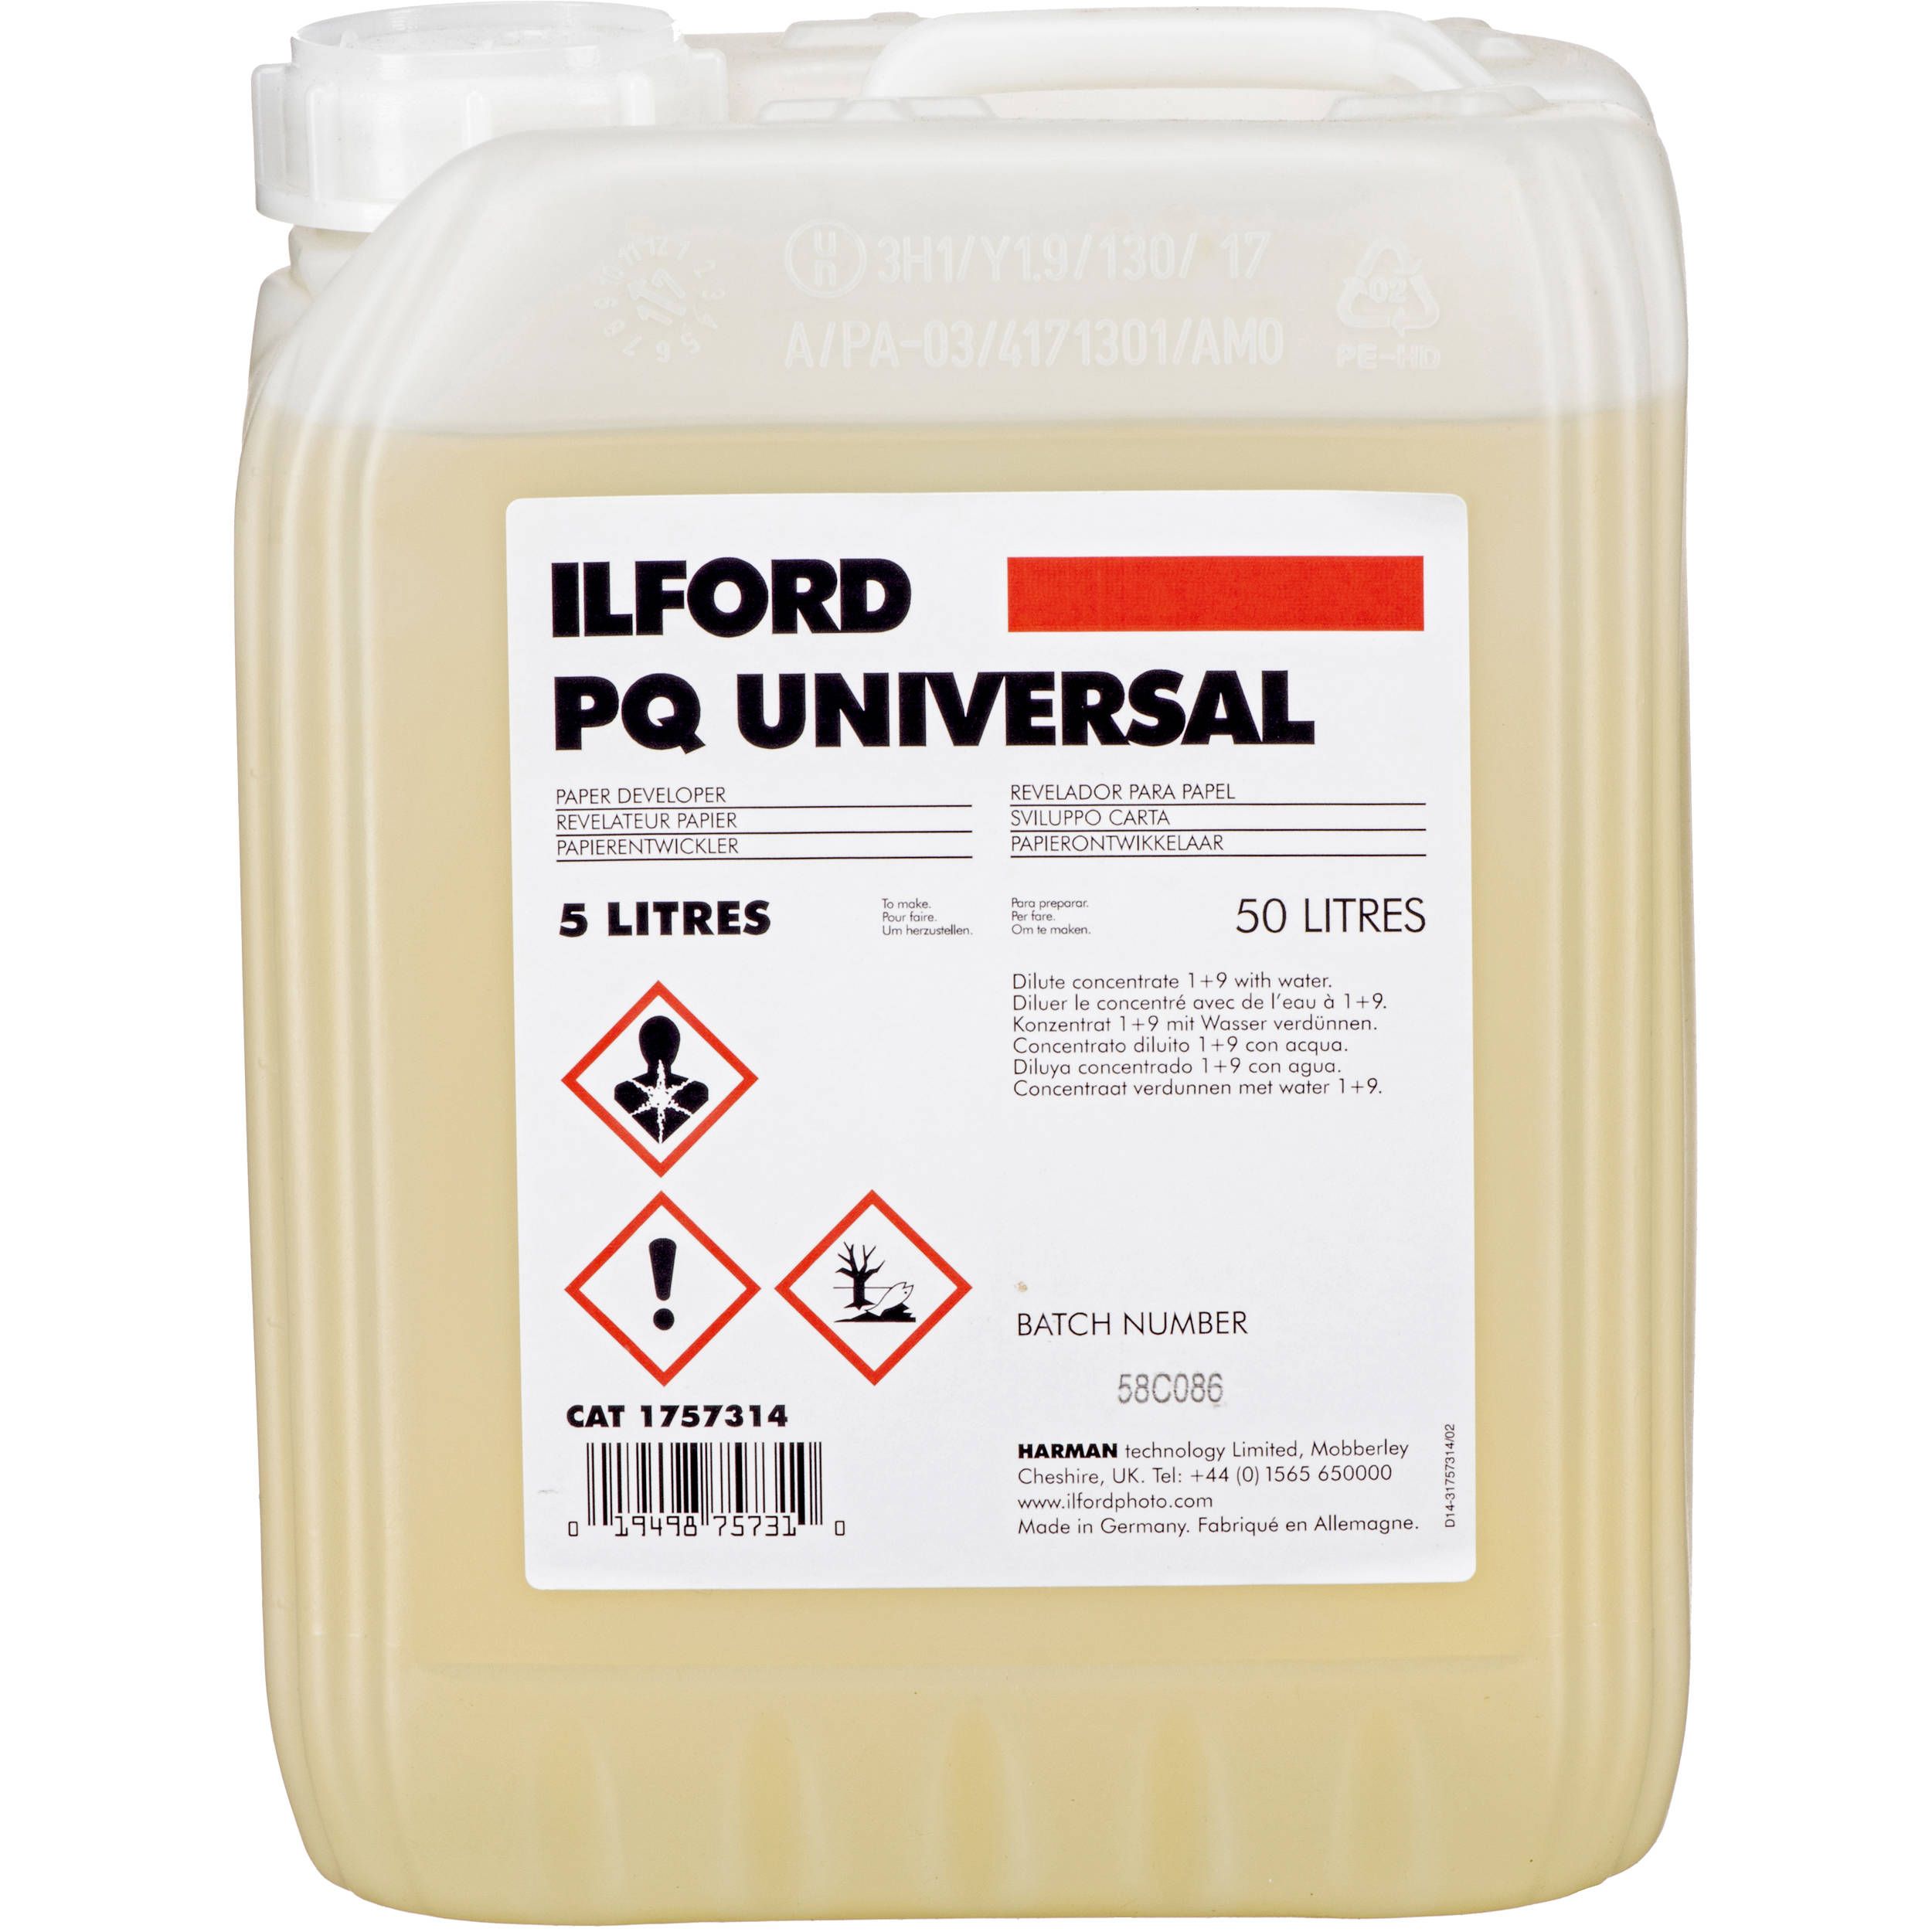 Ilford PQ UNIVERSAL revelador de papel 5 litros